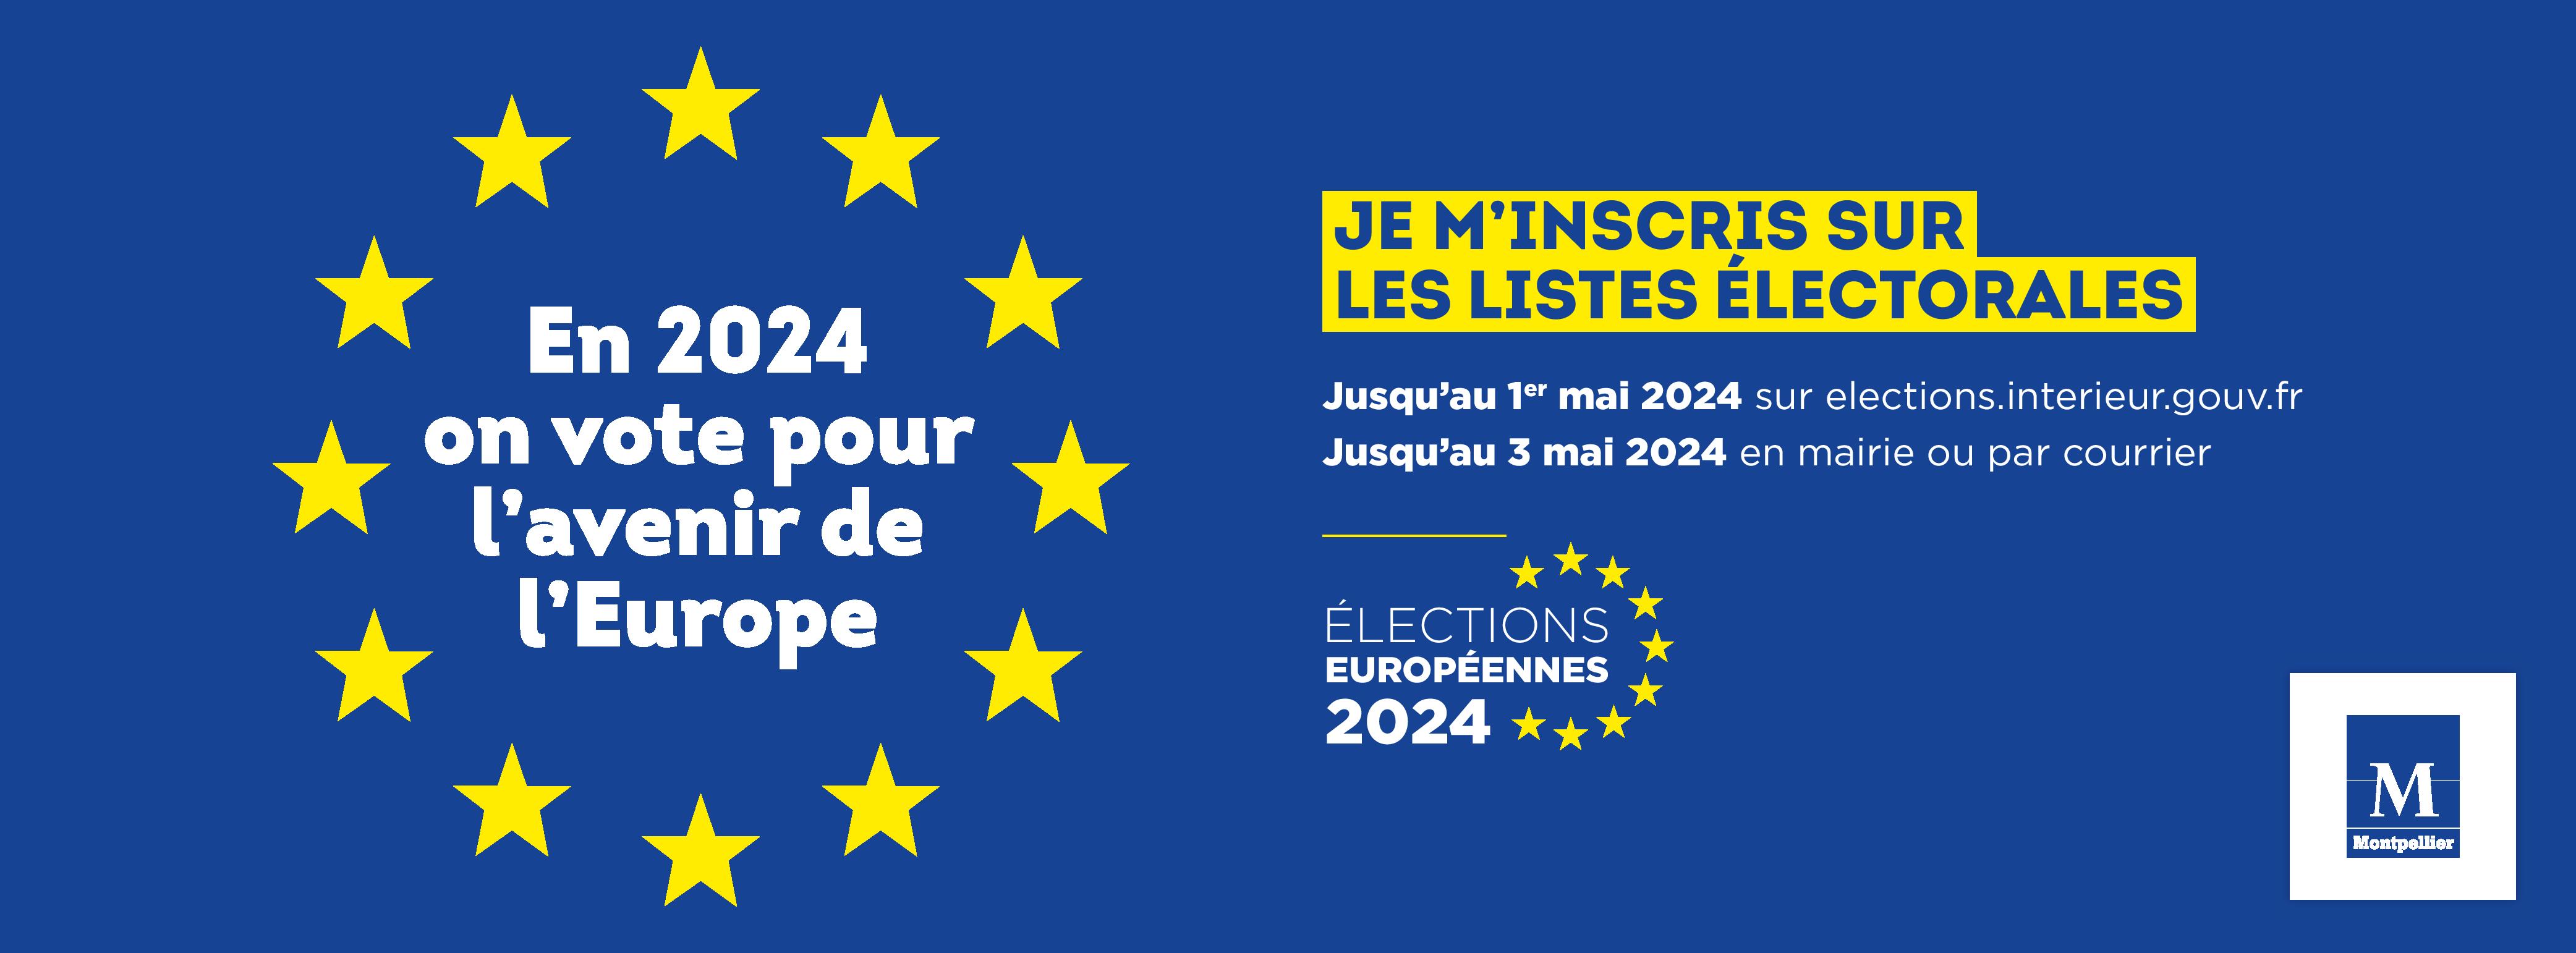 MT-Vote Euro-banner-Inscription-2000x740-06-page-001.jpg